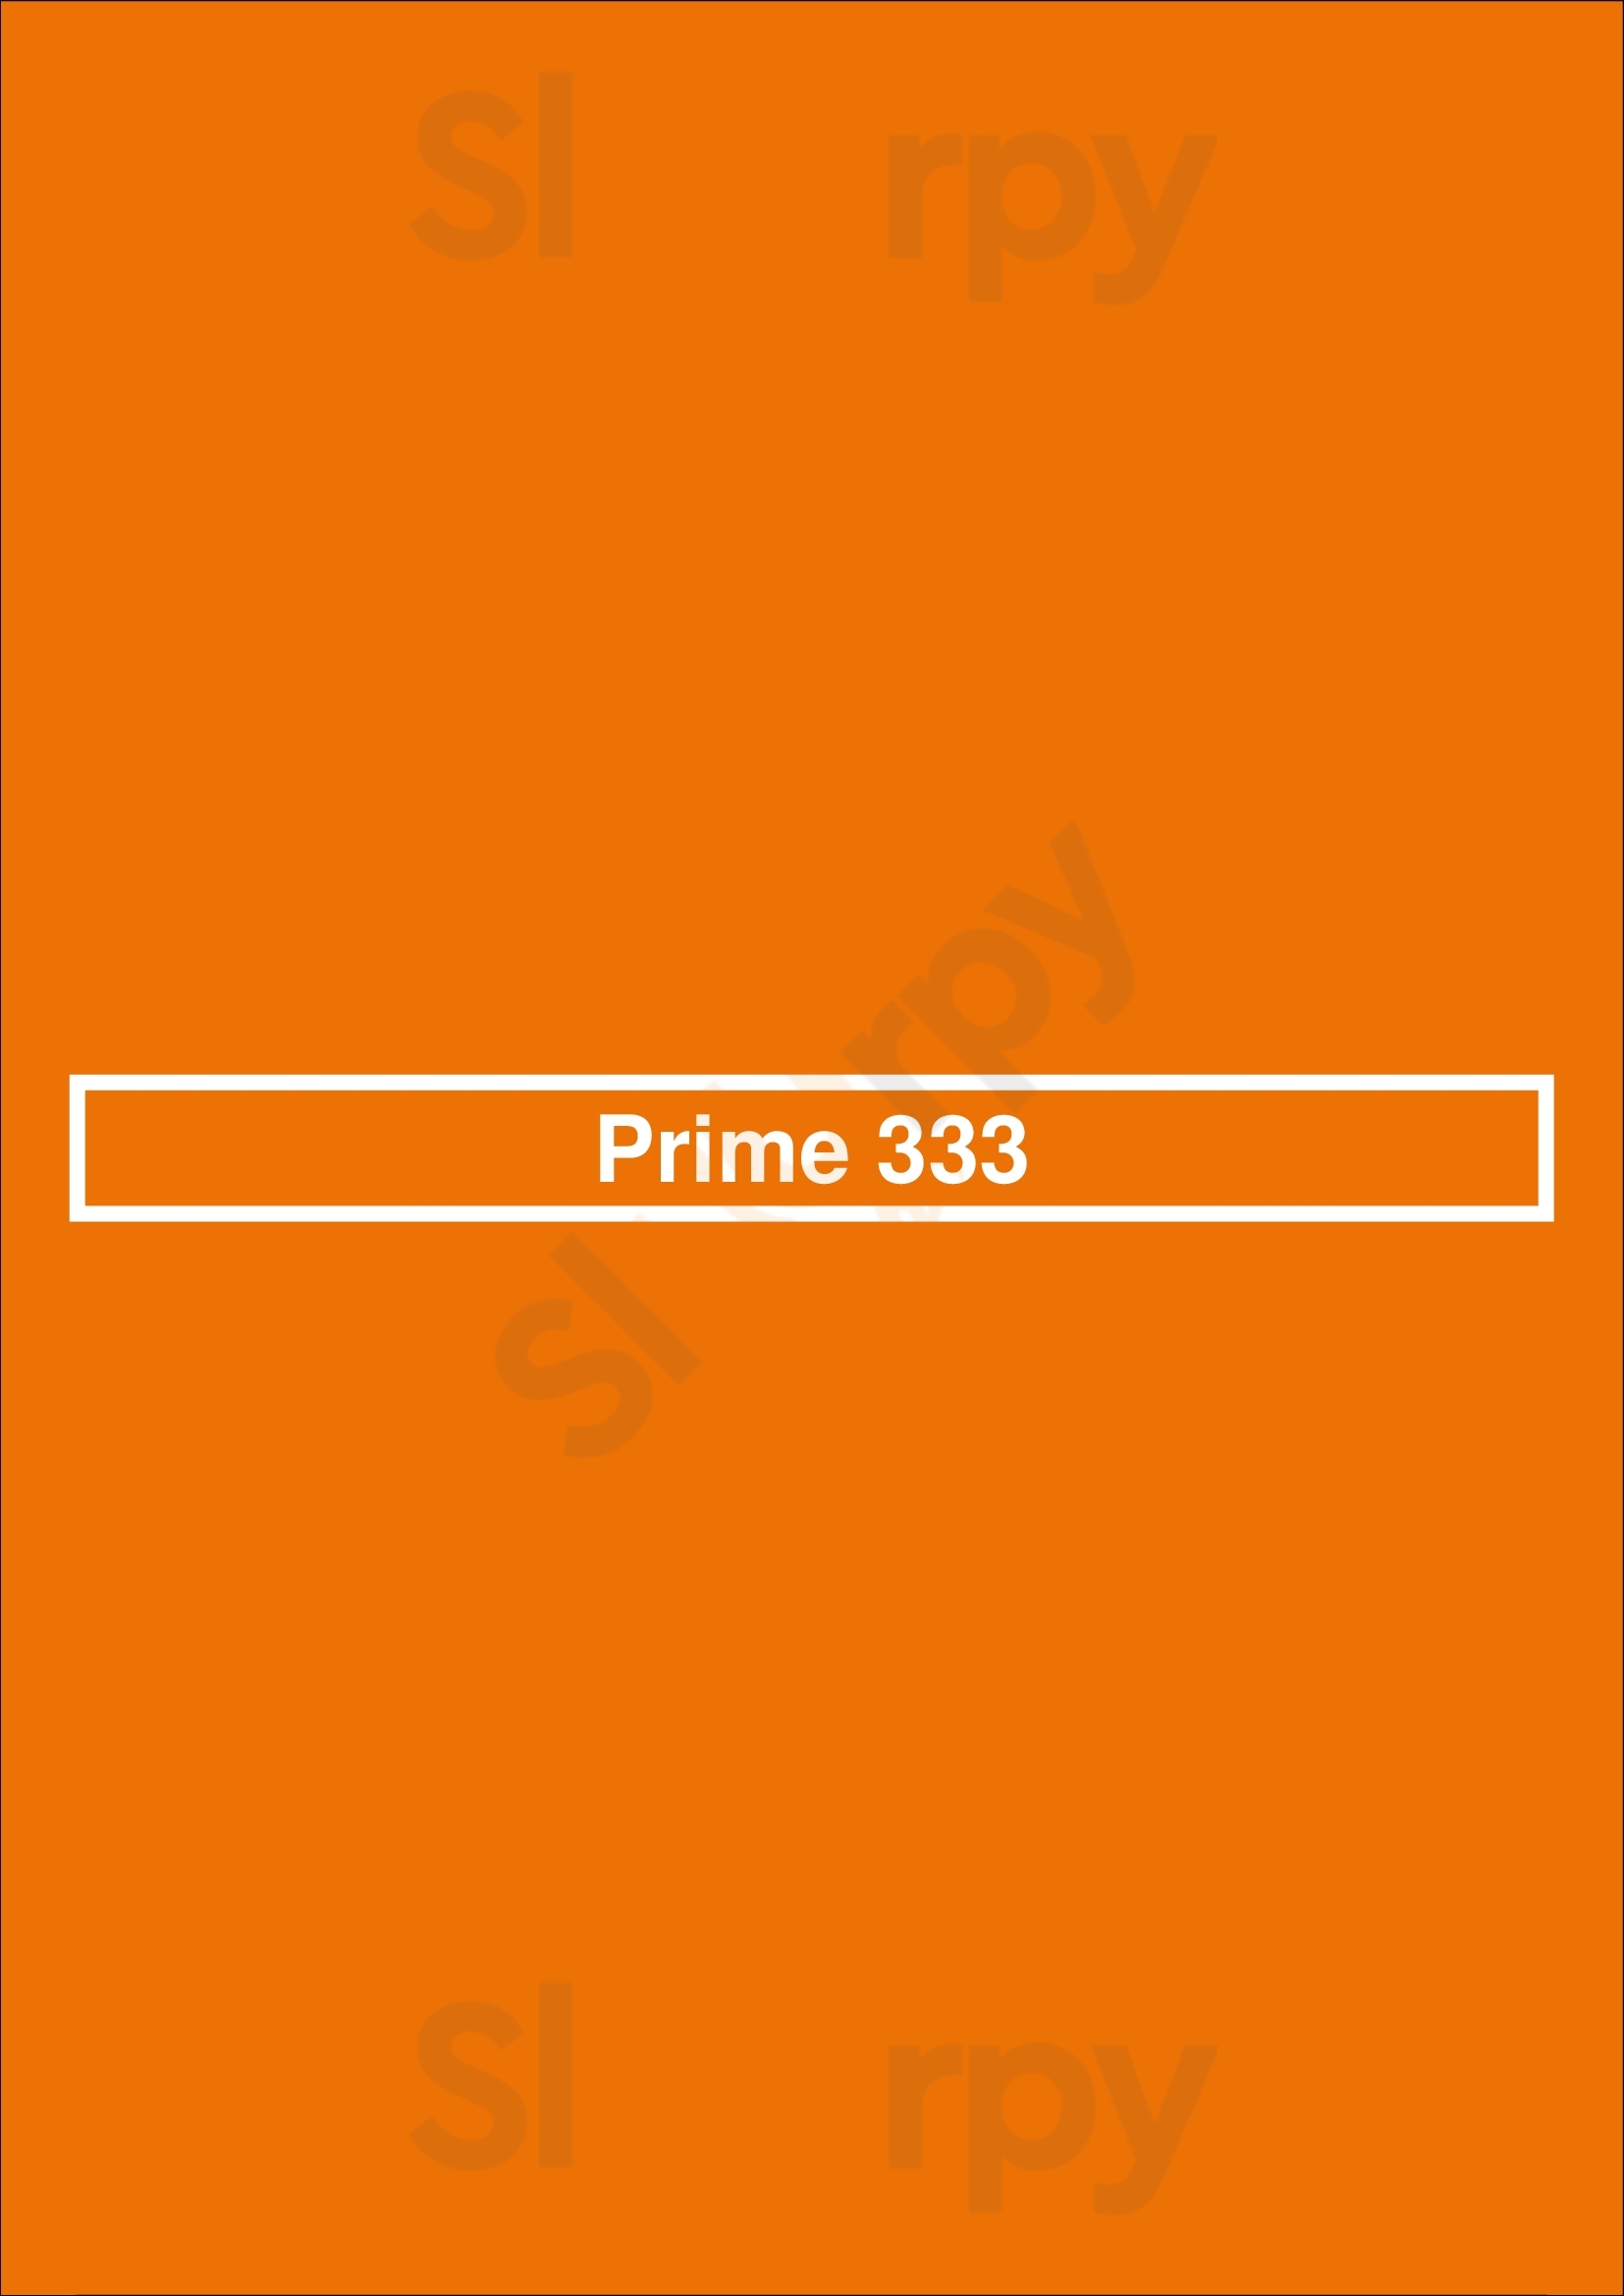 Prime 333 New York City Menu - 1